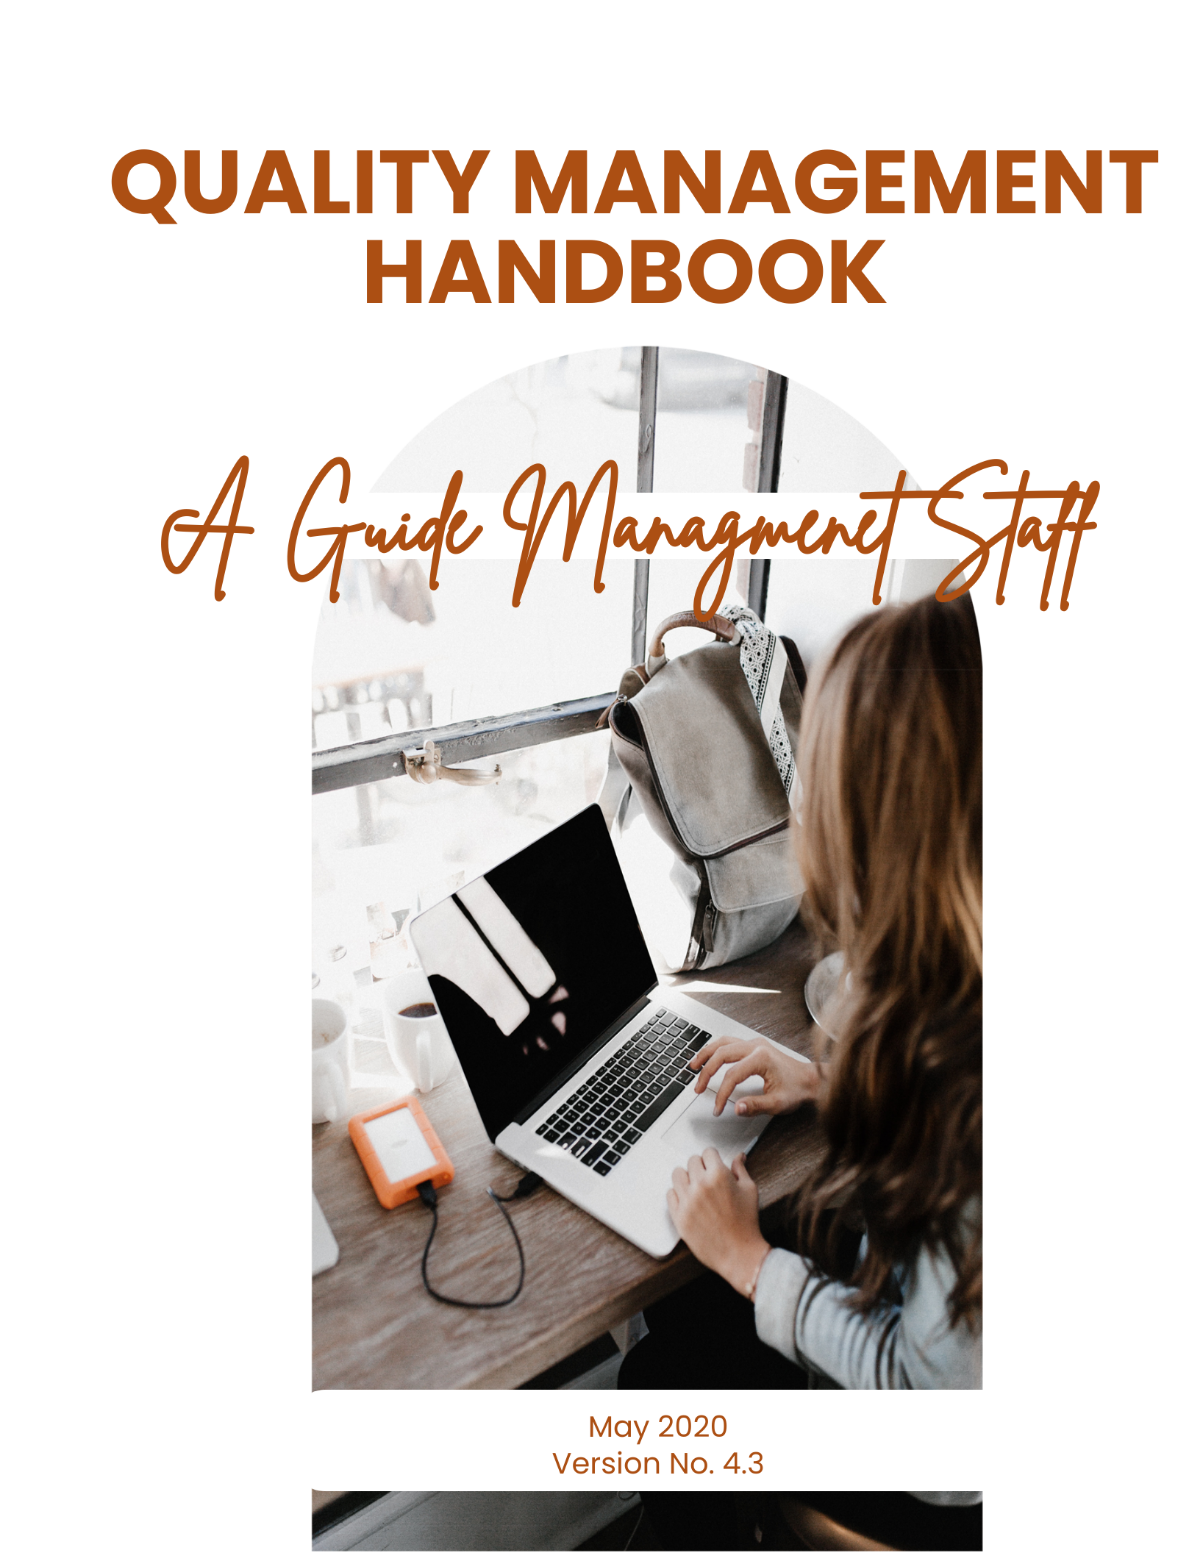 Quality Management Handbook Template